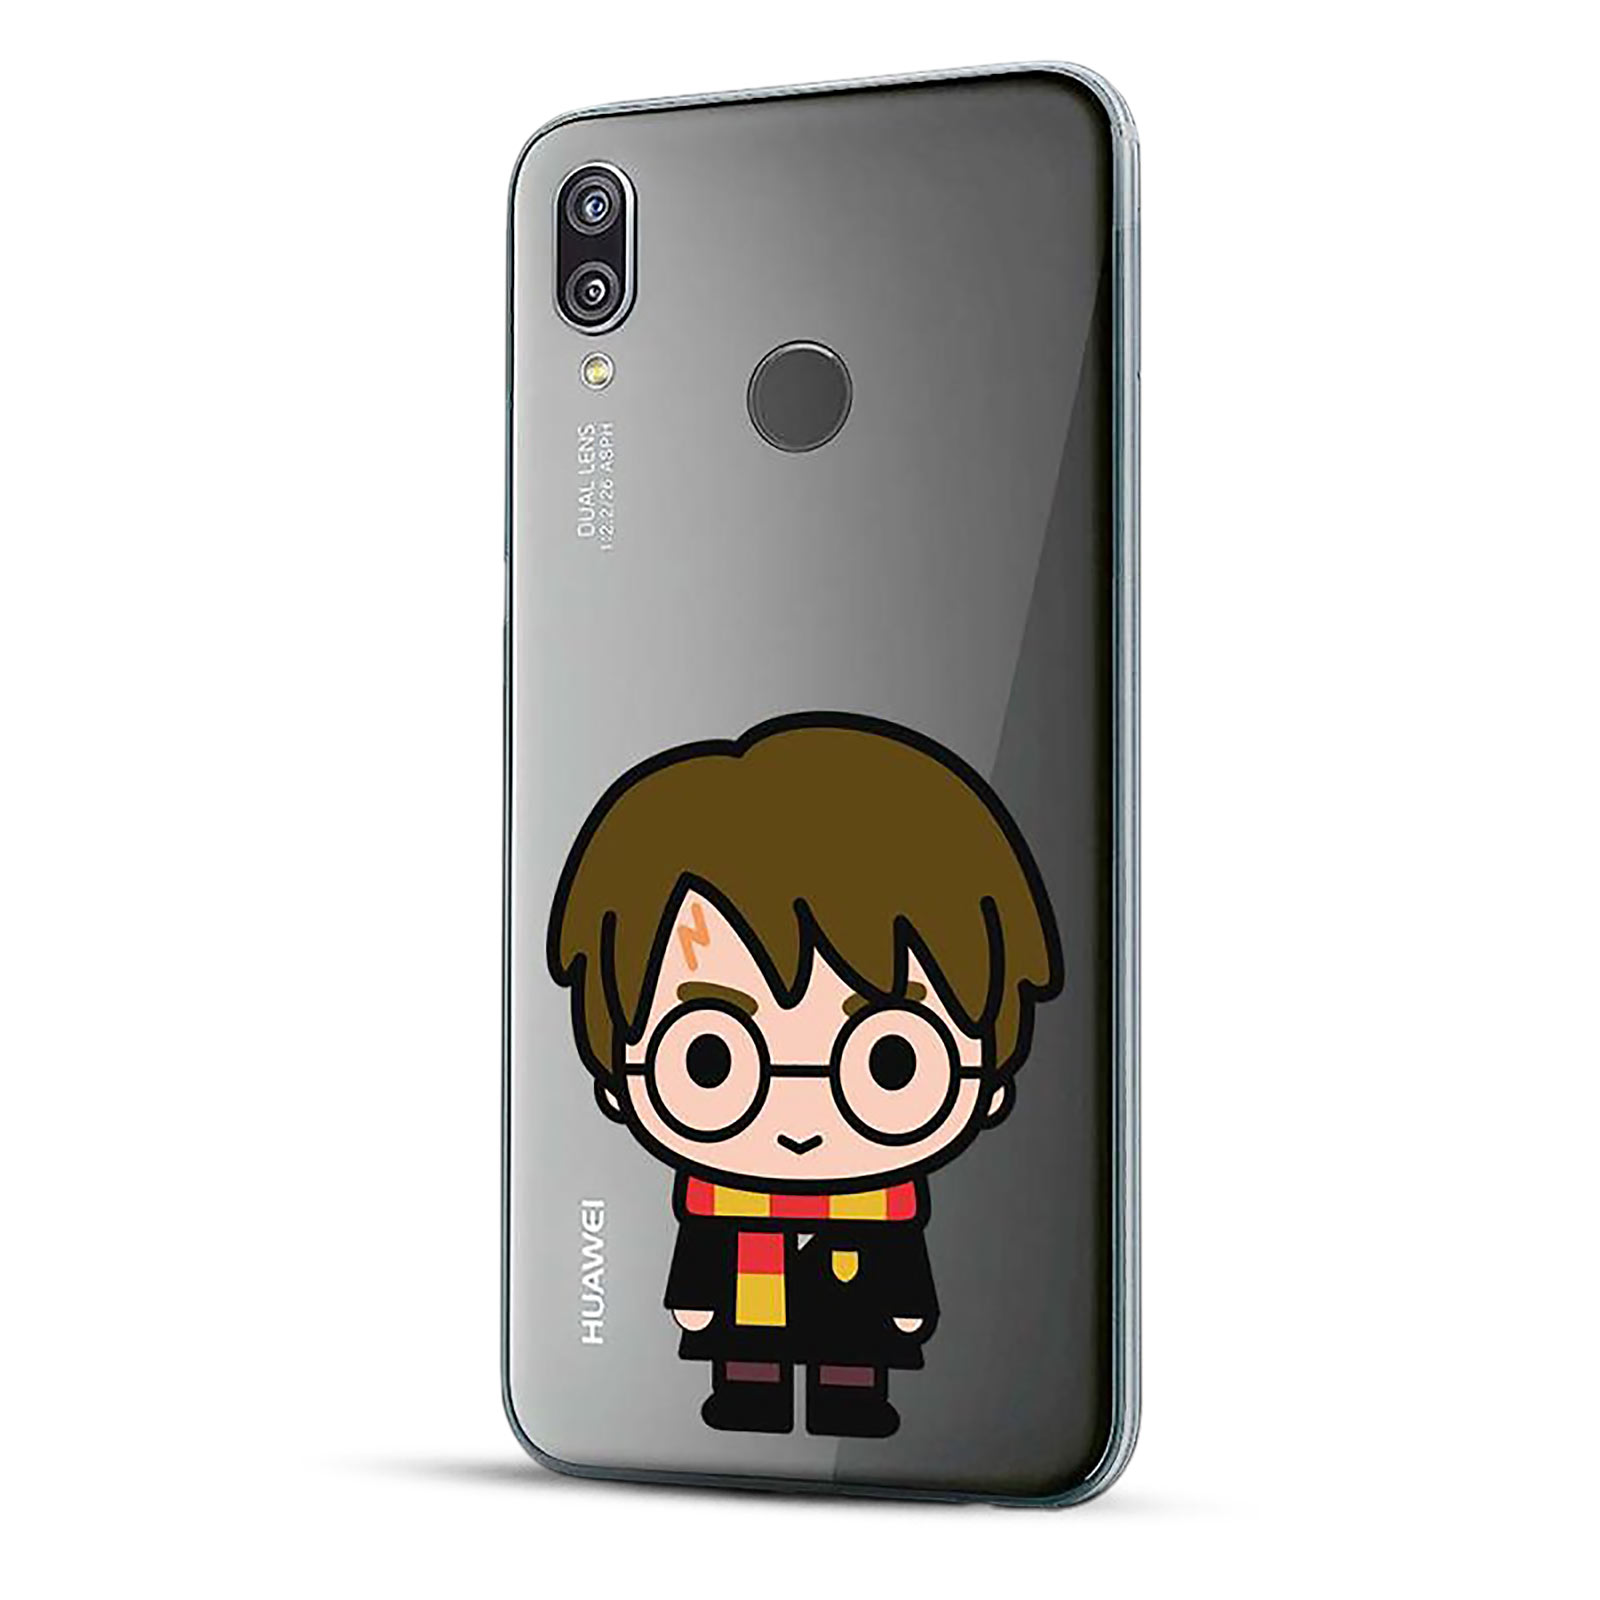 Harry Potter - Coque Huawei P20 Lite Chibi en silicone transparent